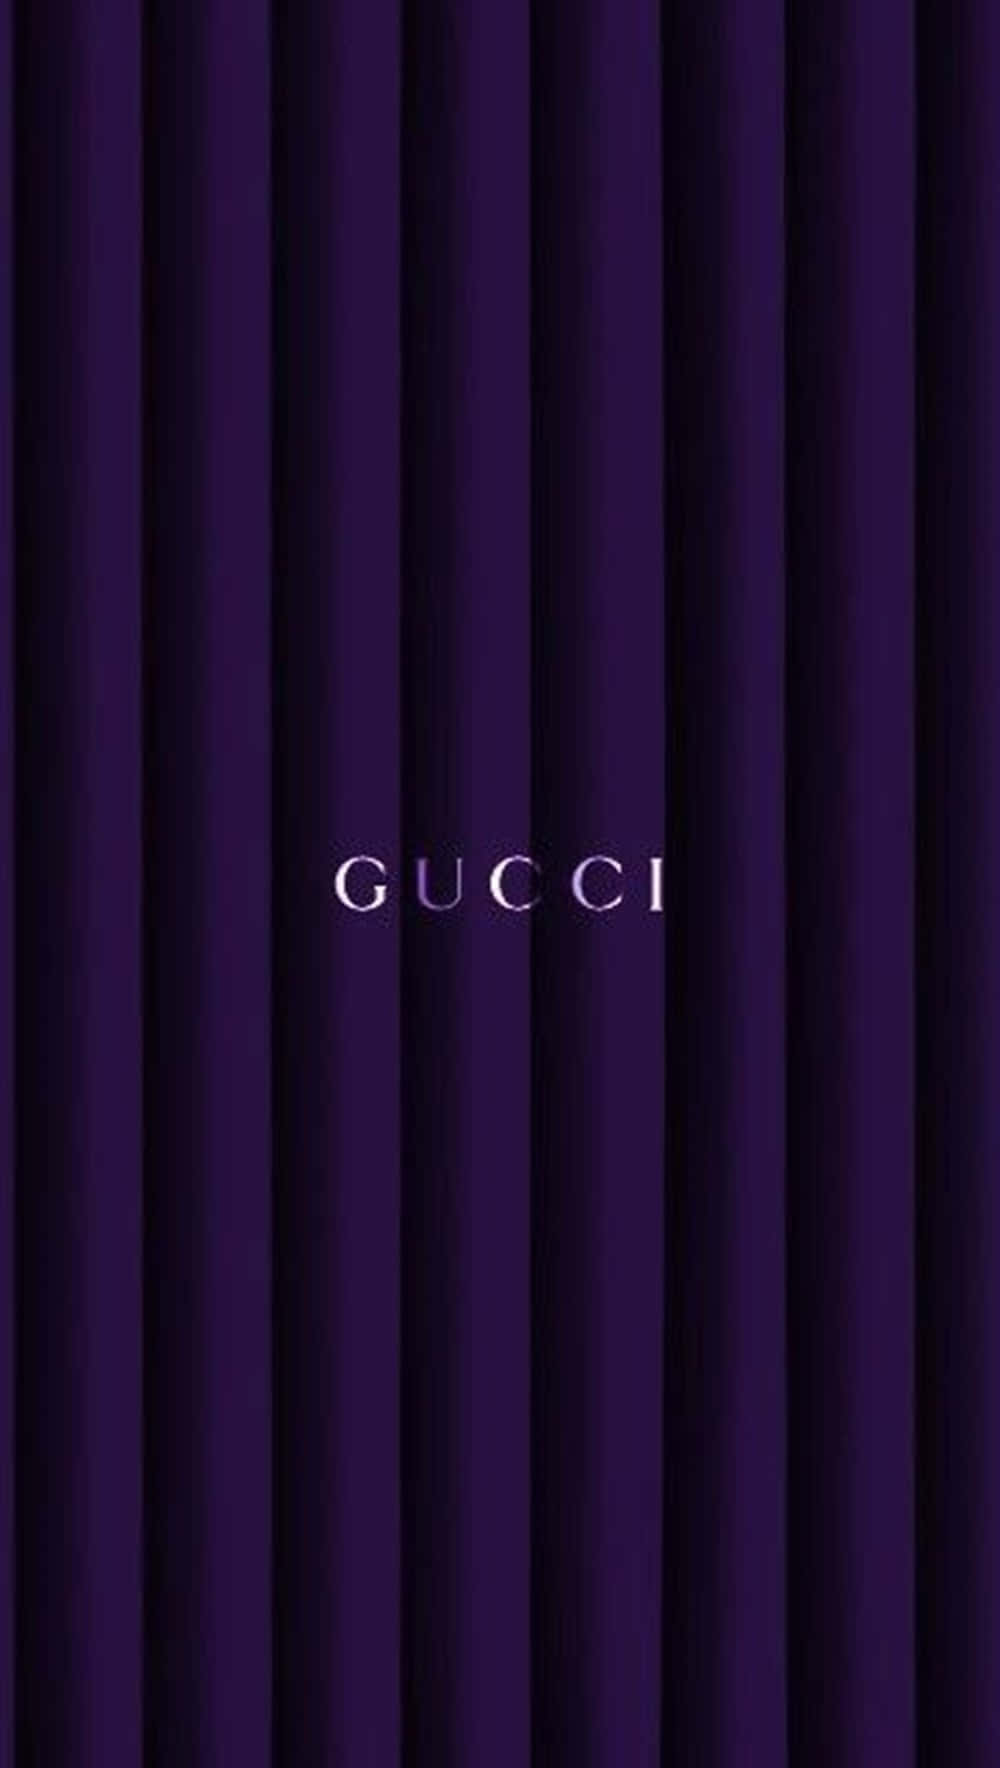 Muestratu Estilo Con Gucci Púrpura Fondo de pantalla